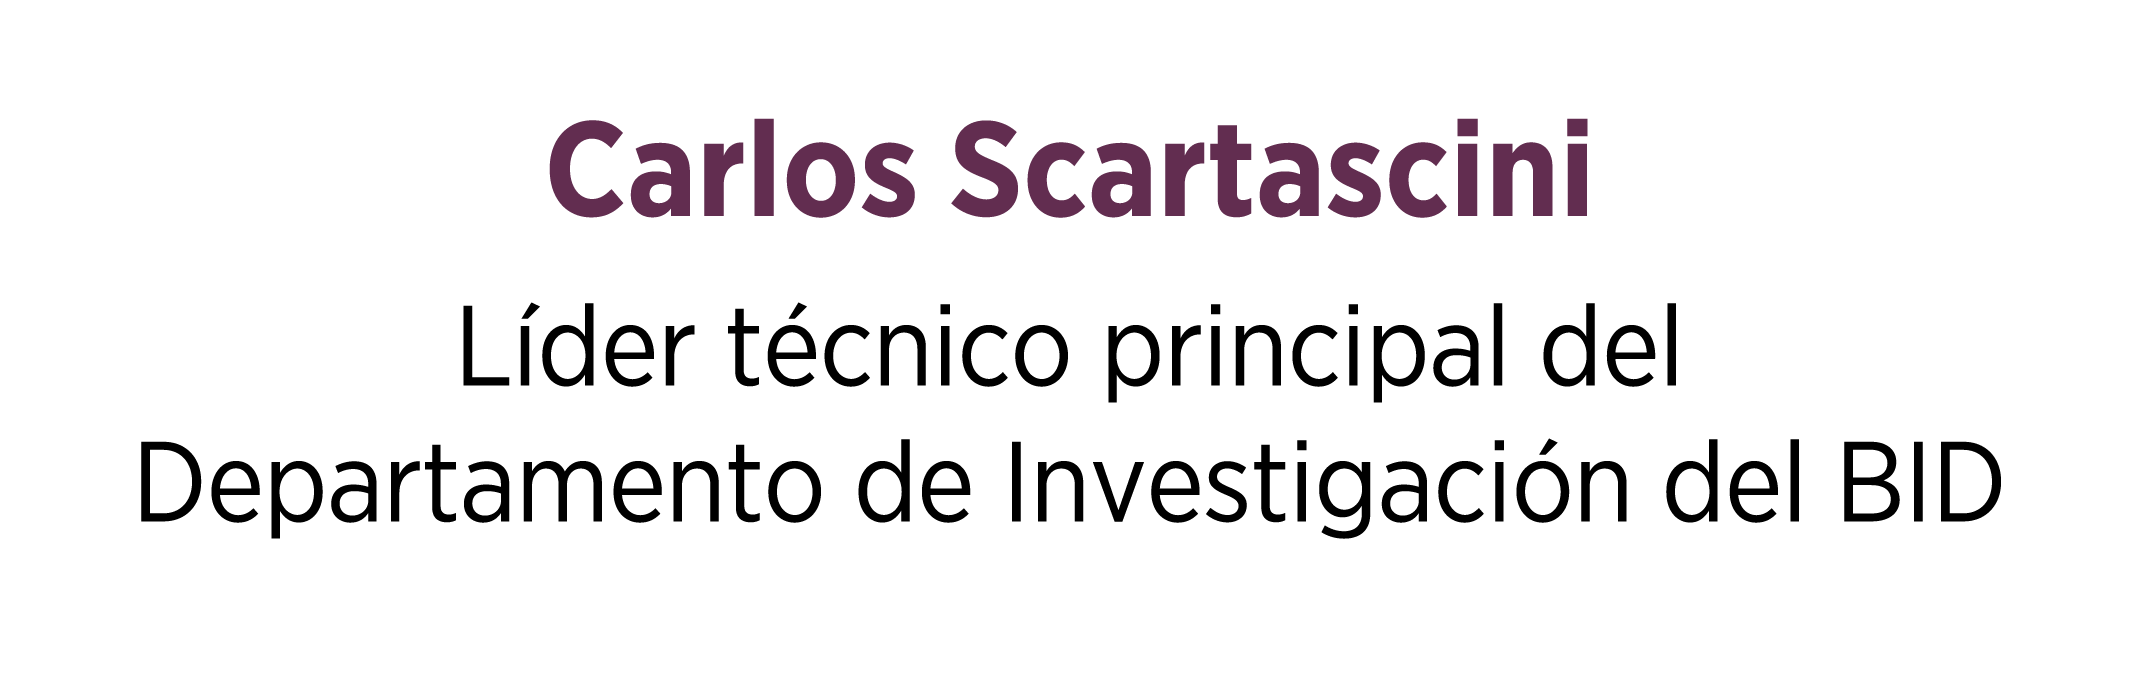 Carlos Scartascini